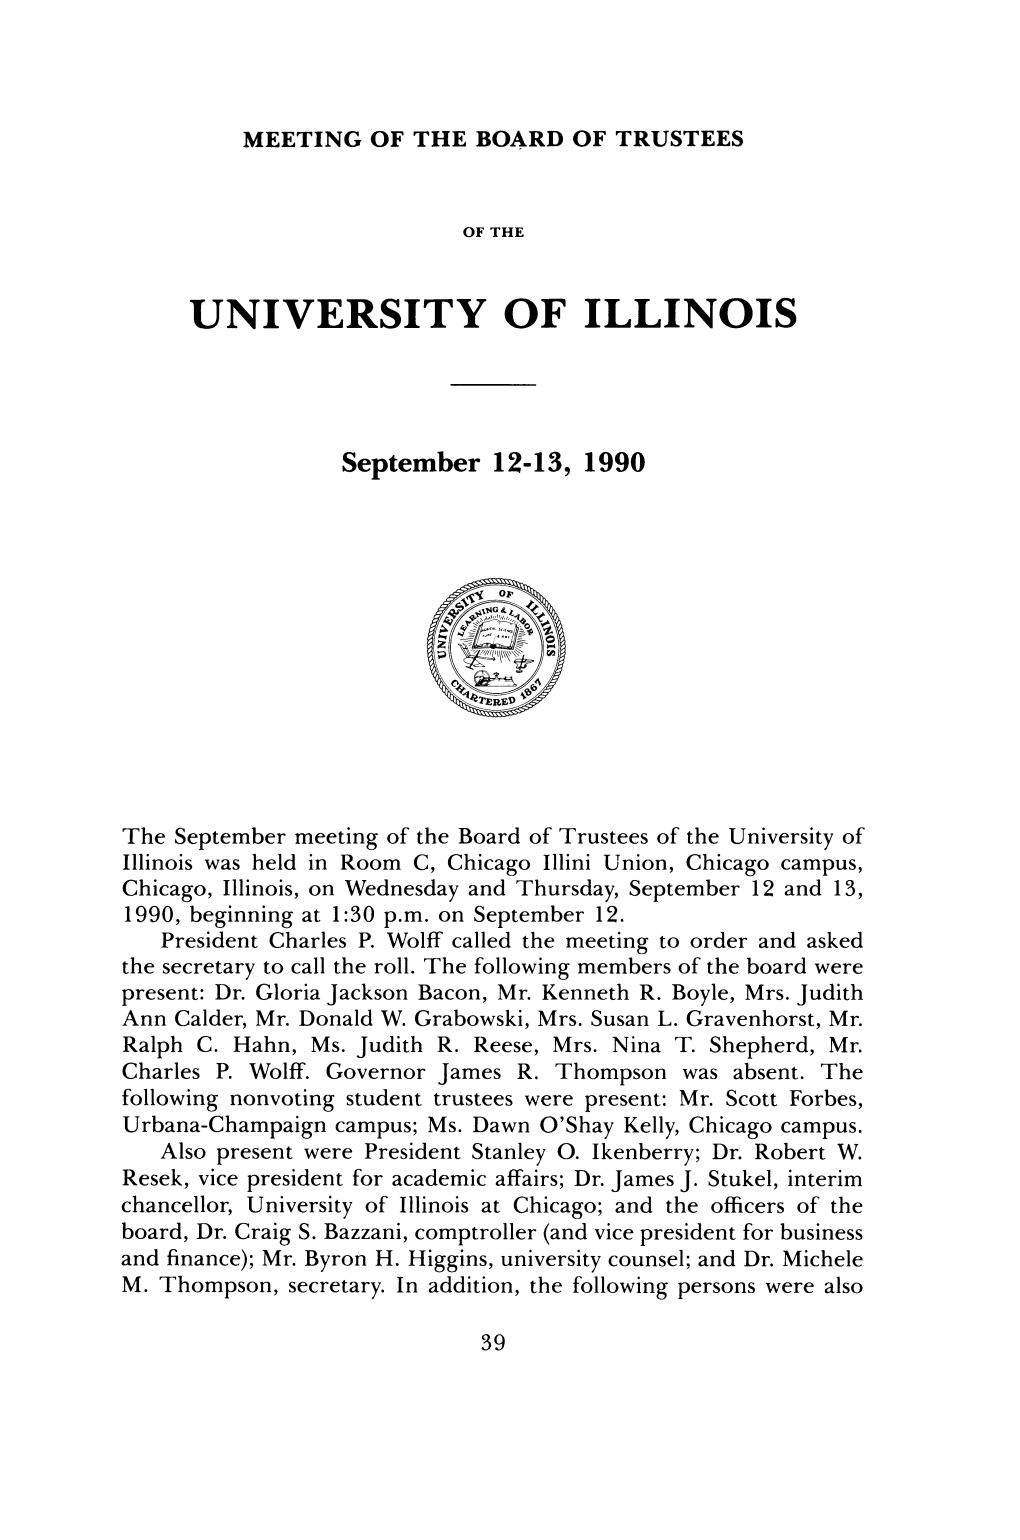 September 12-13, 1990, Minutes | UI Board of Trustees